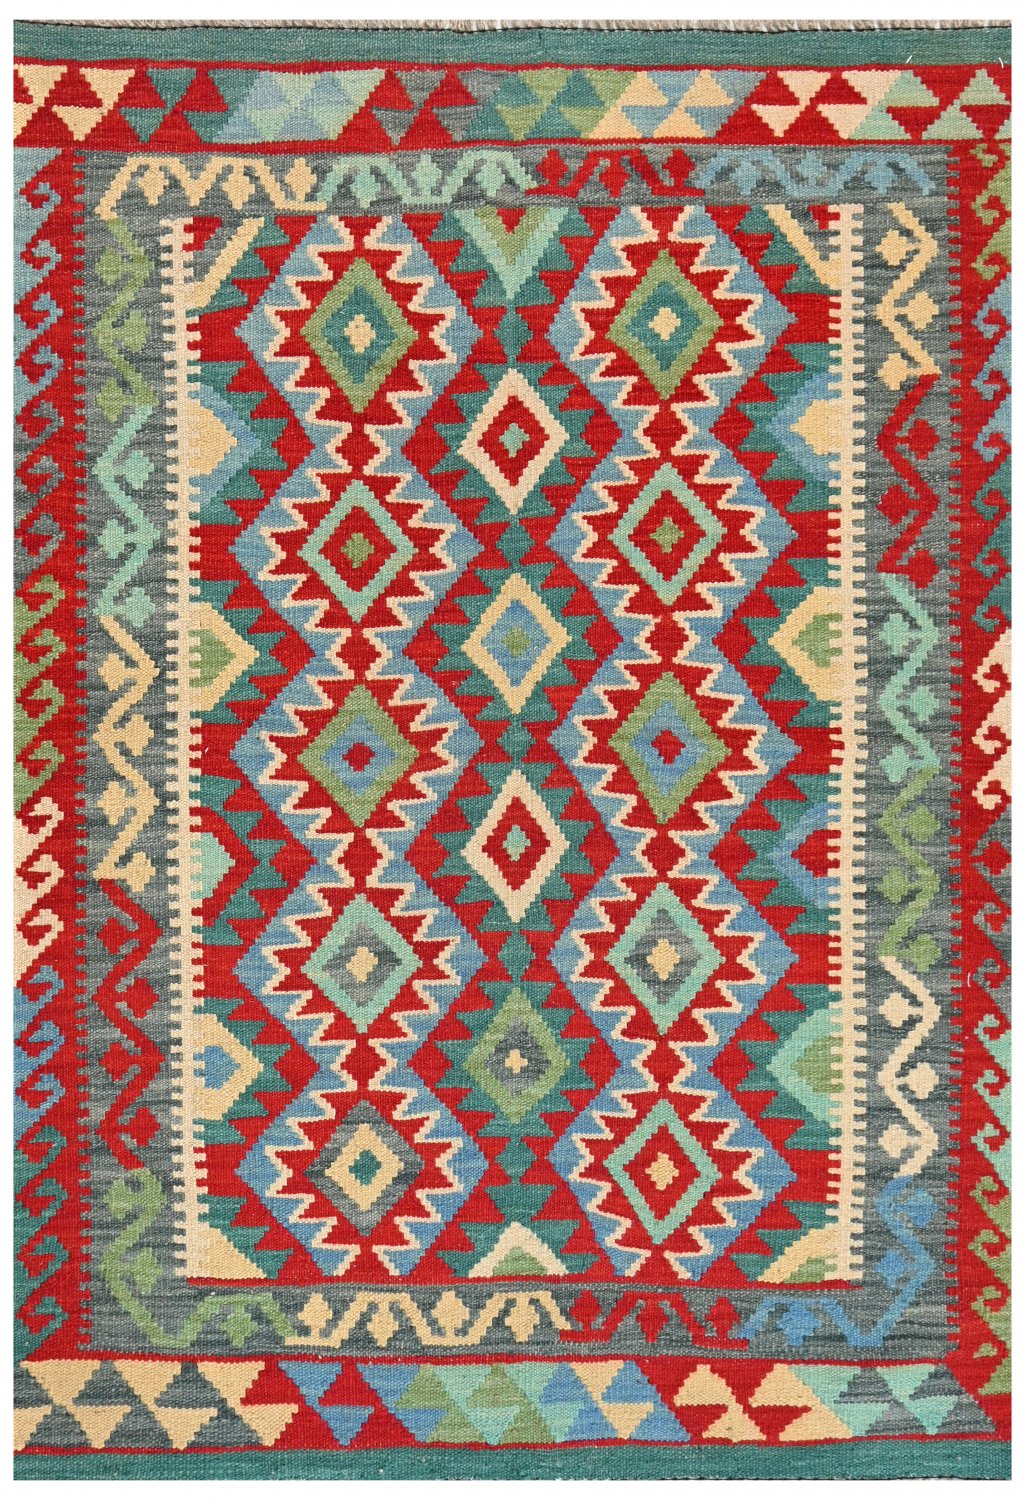 Kilim rug Afghan 149 x 105 cm